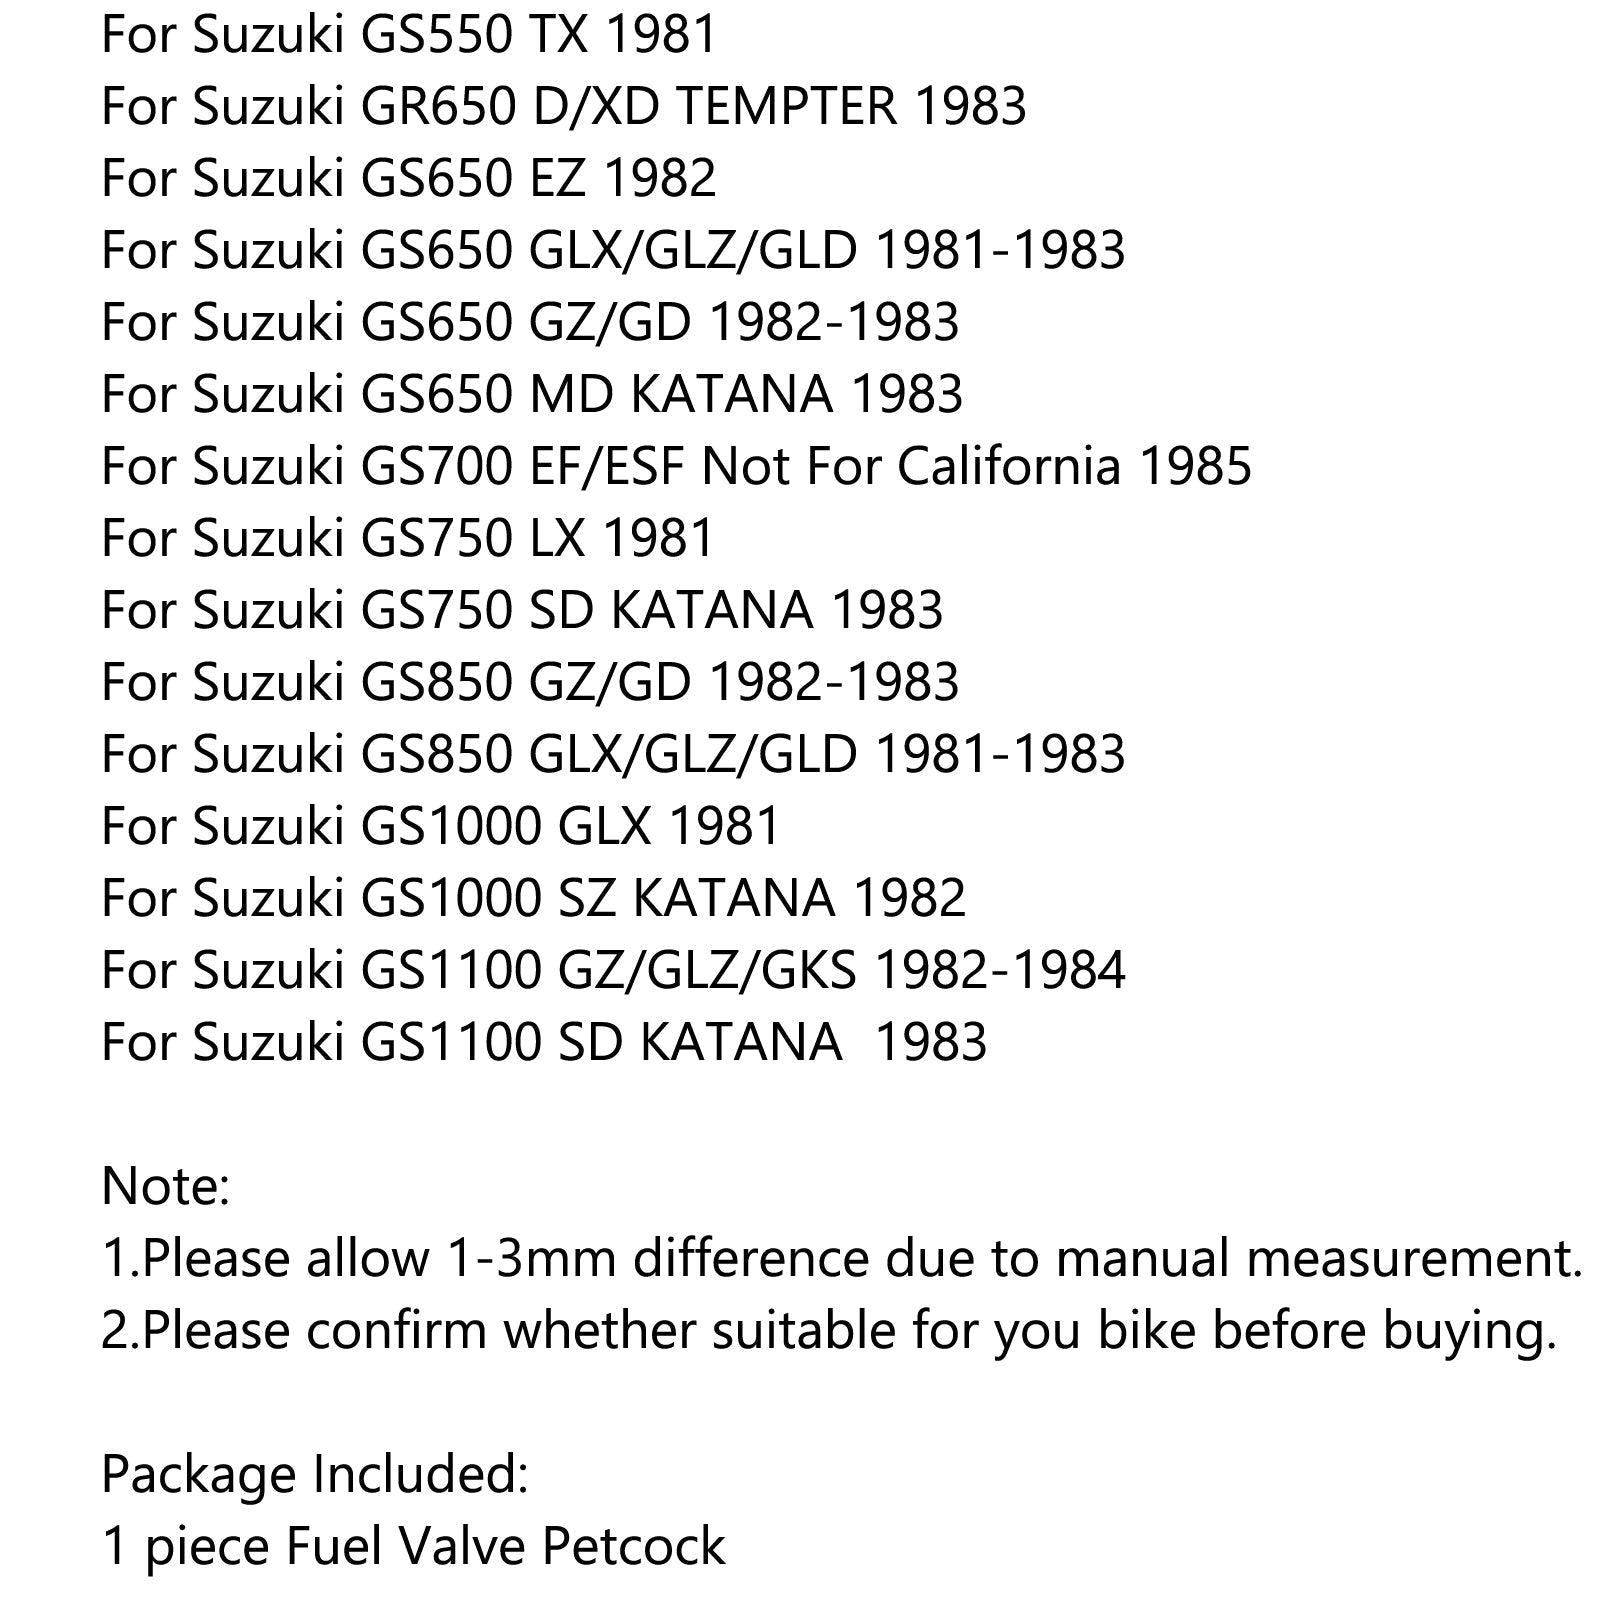 Válvula de combustible de gasolina Petcock 44300-45011 para Suzuki GS300 GS450 GS550 GS650 genérico